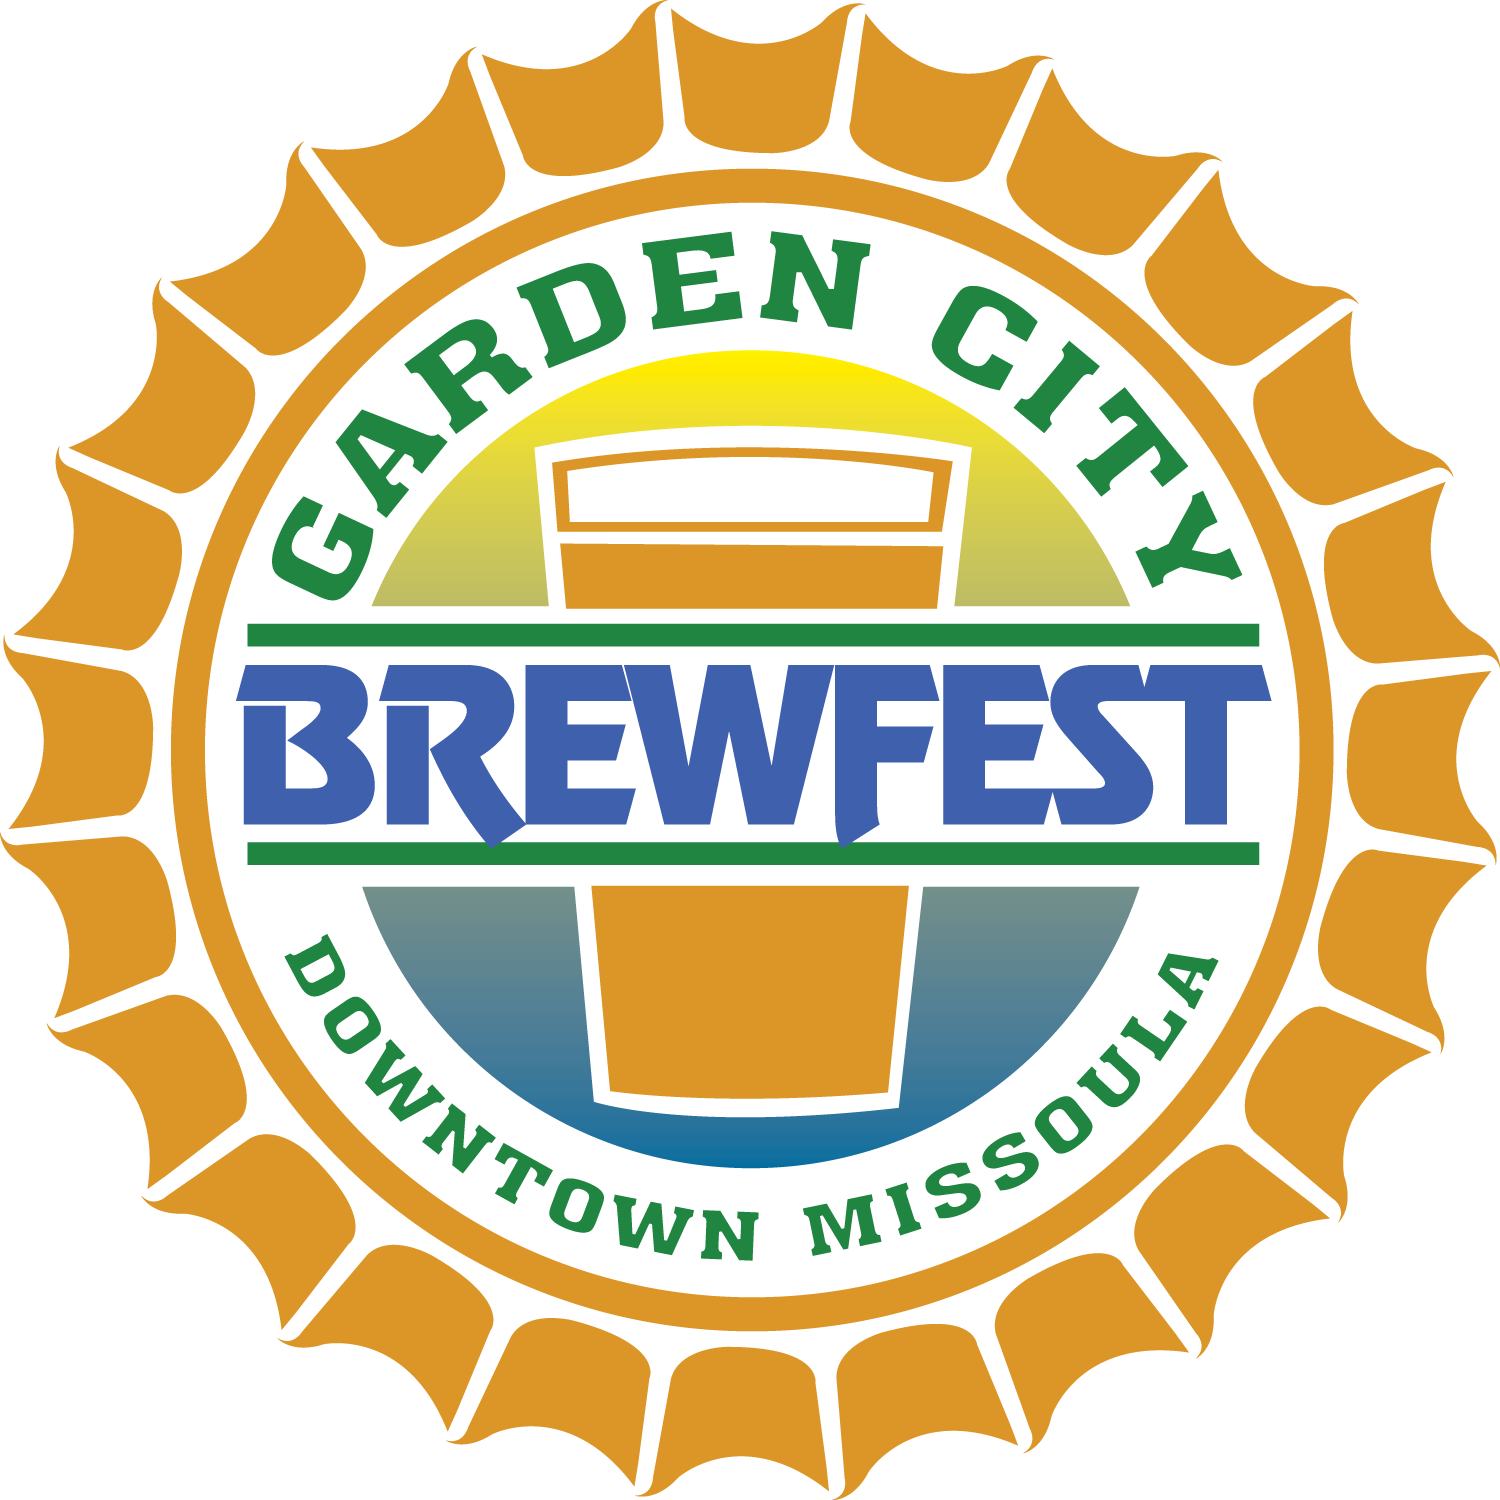 Garden City Brewfest at Caras Park in Downtown Missoula, Montana